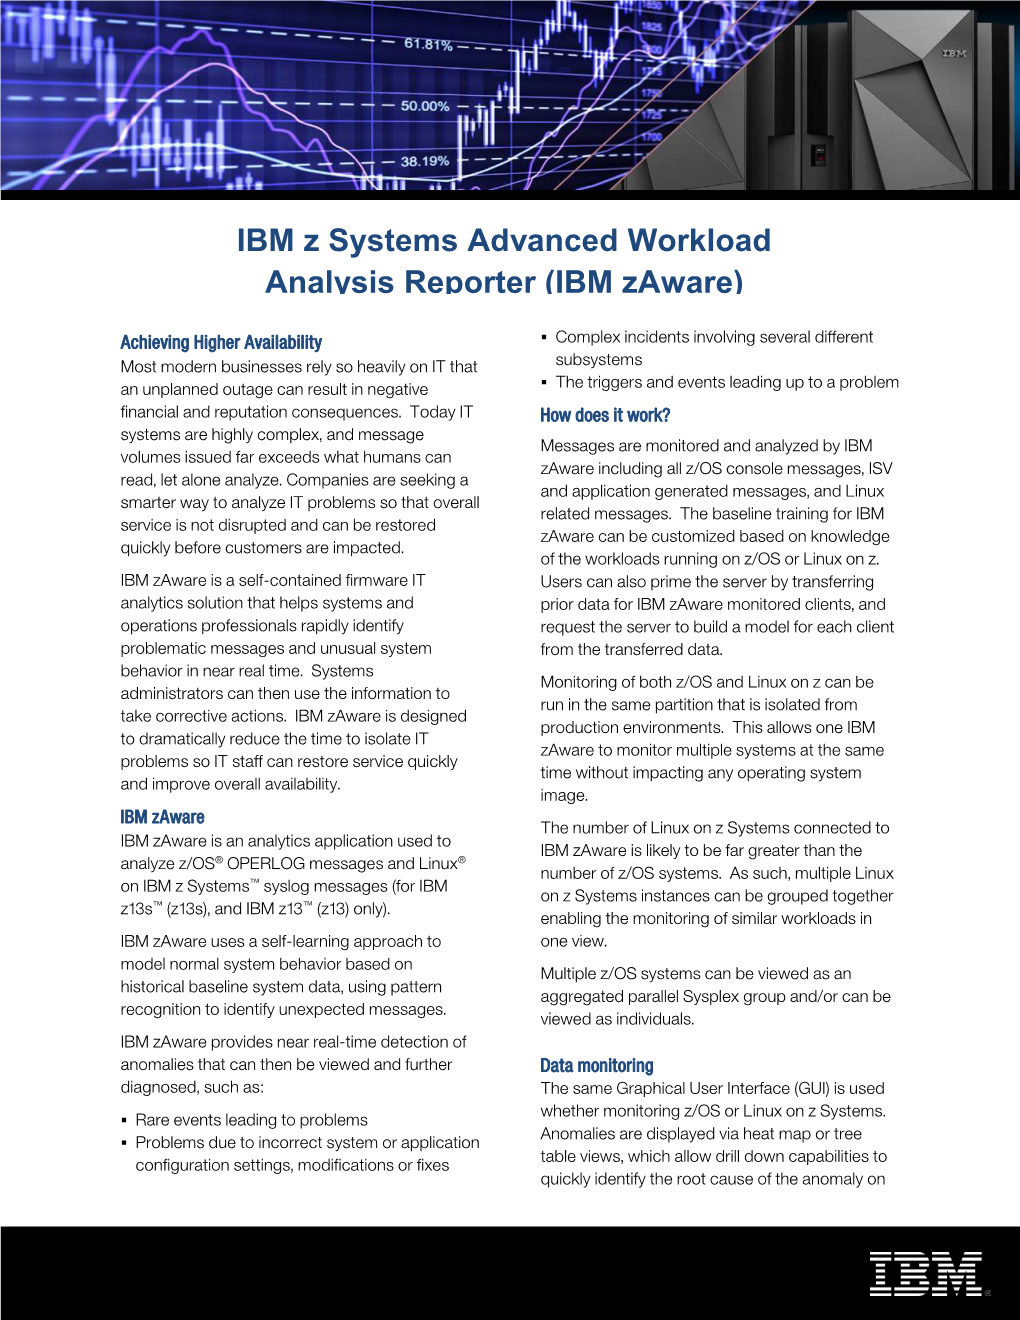 IBM Z Systems Advanced Workload Analysis Reporter (IBM Zaware)